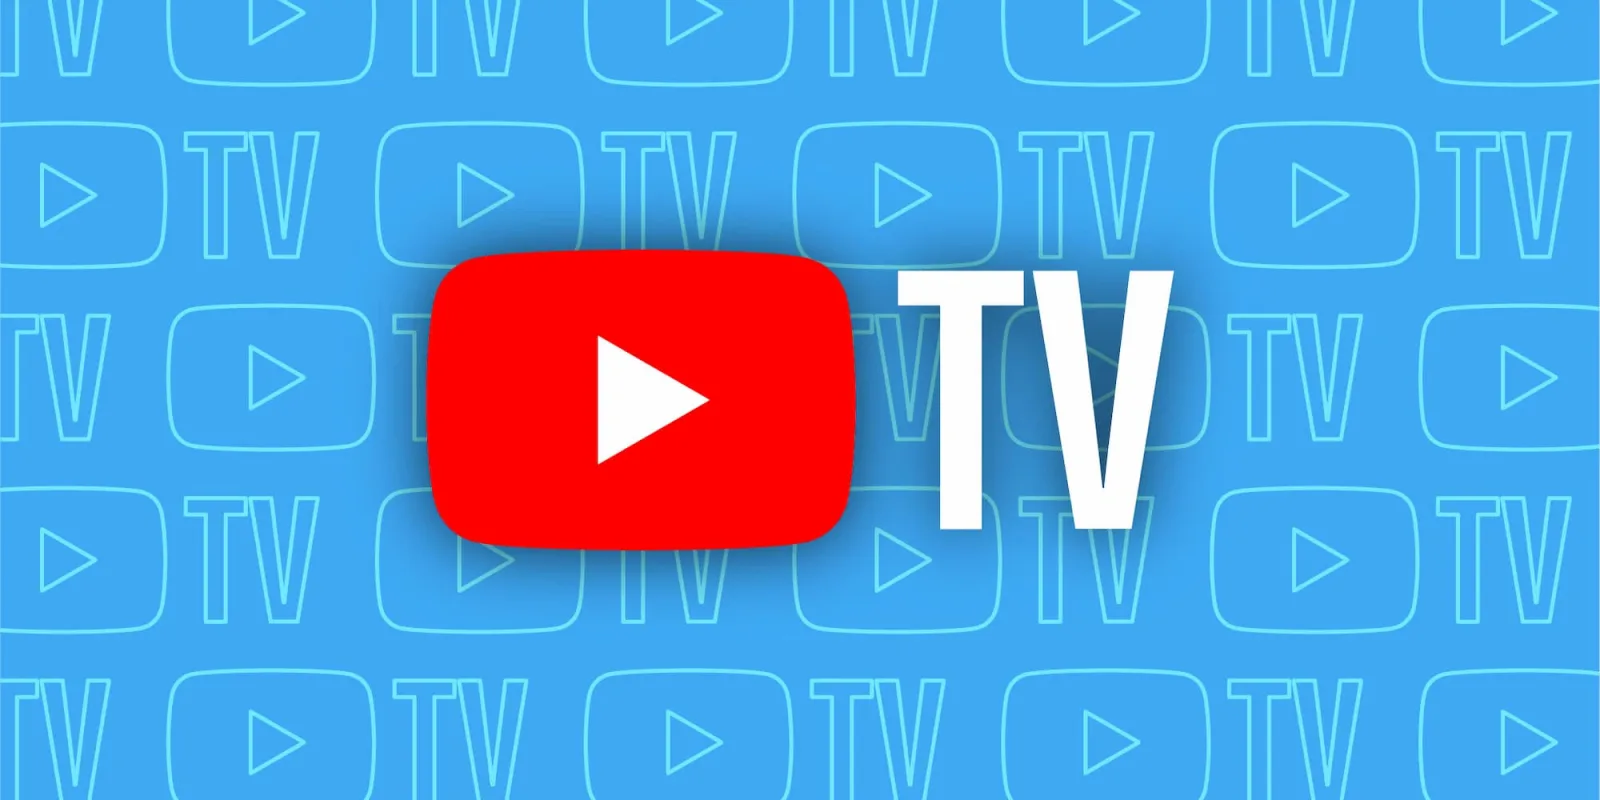 YouTube-TV-Logo